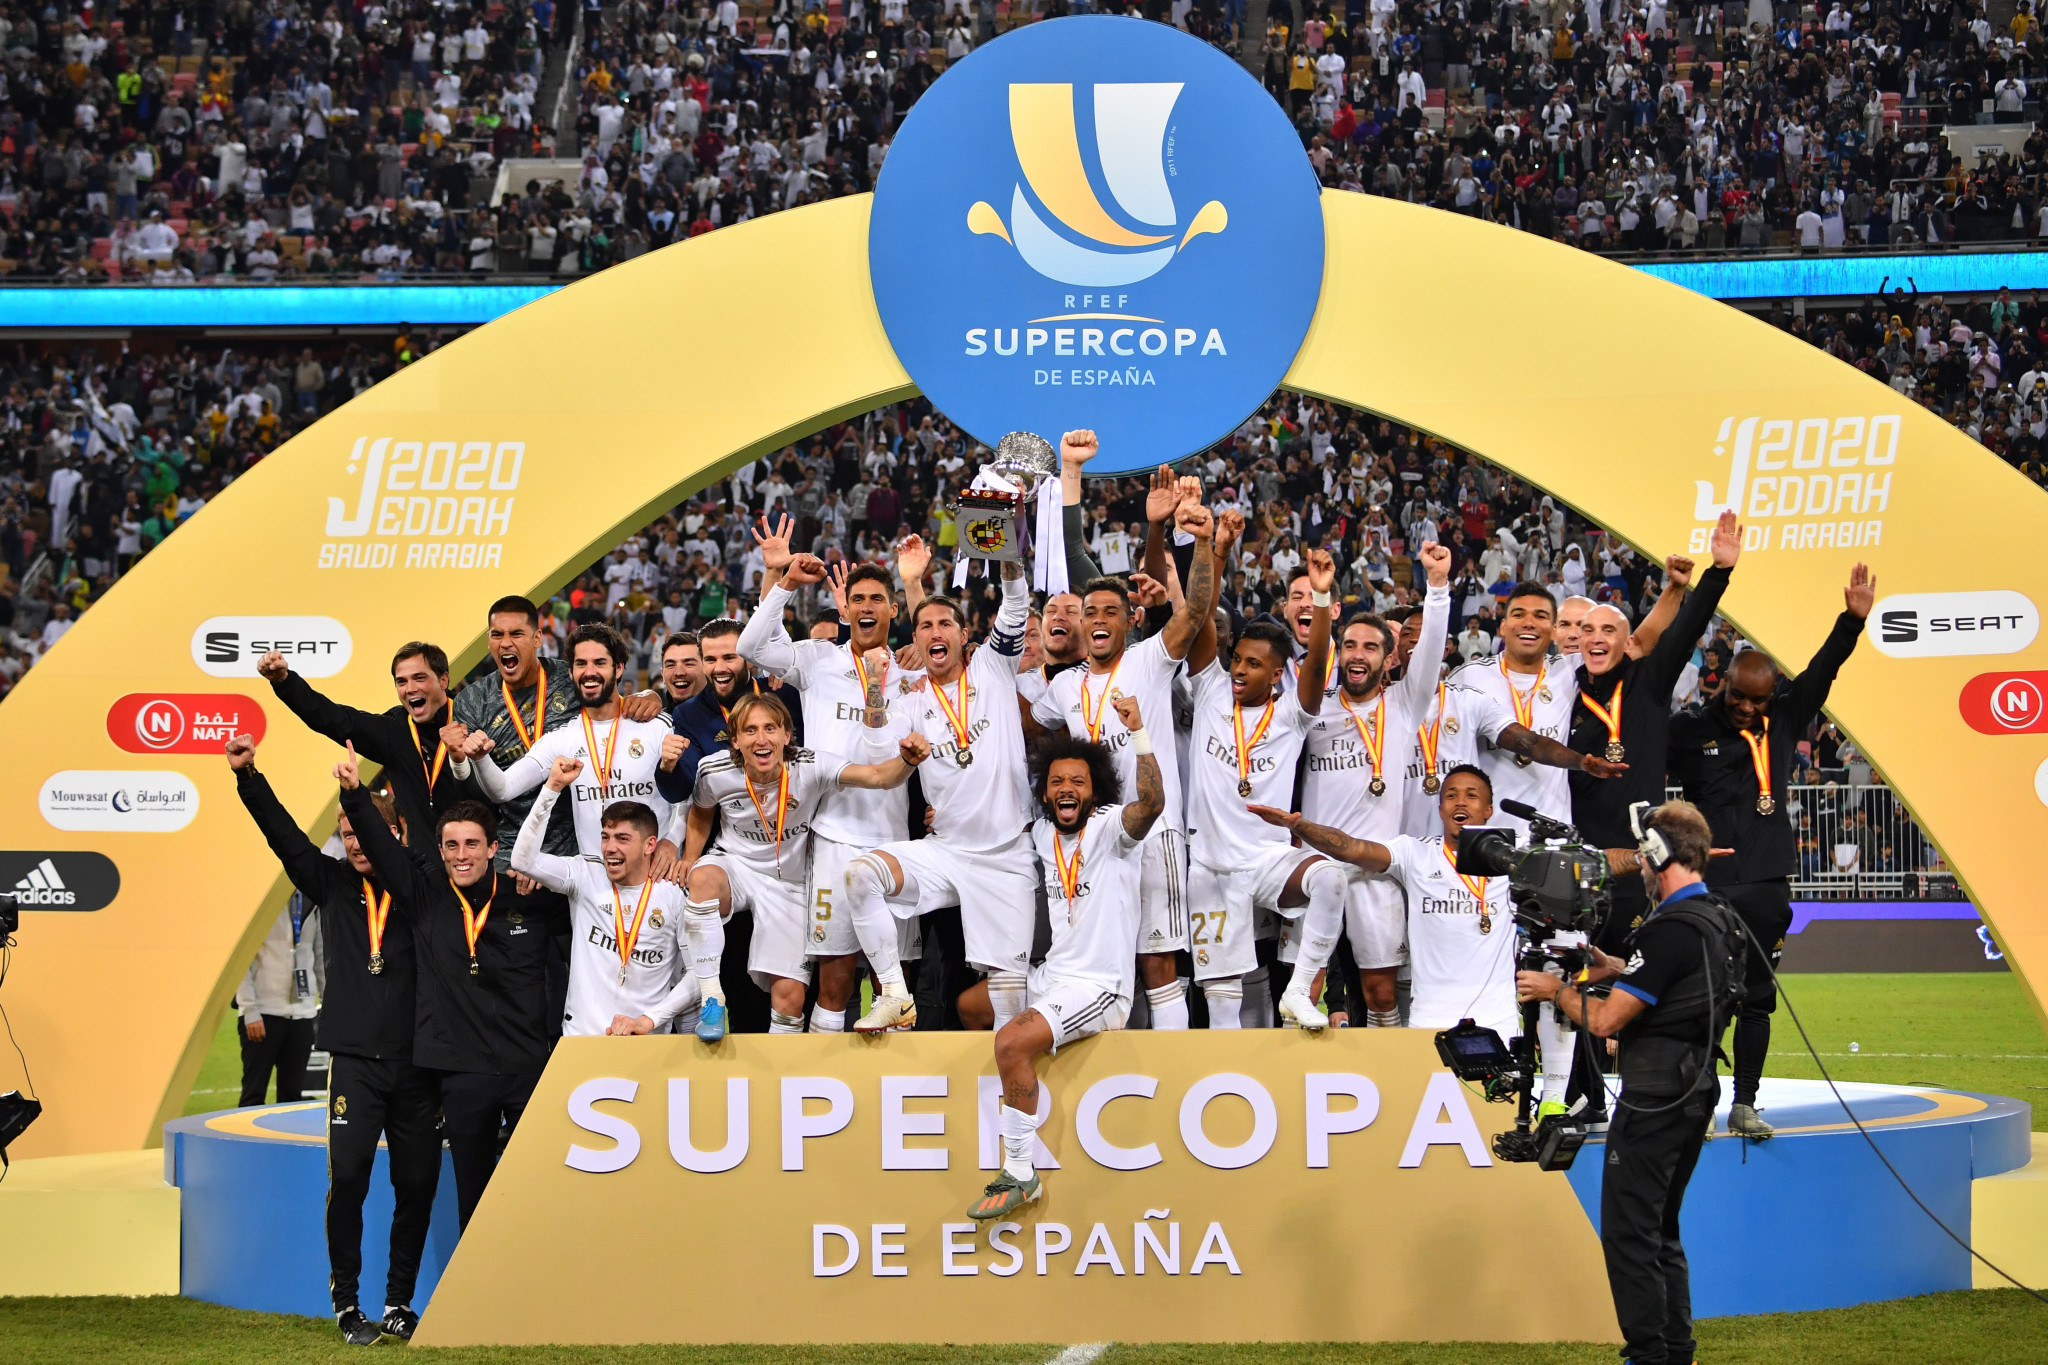 Spain's Supercopa de España was held in Jeddah last month ©Getty Images